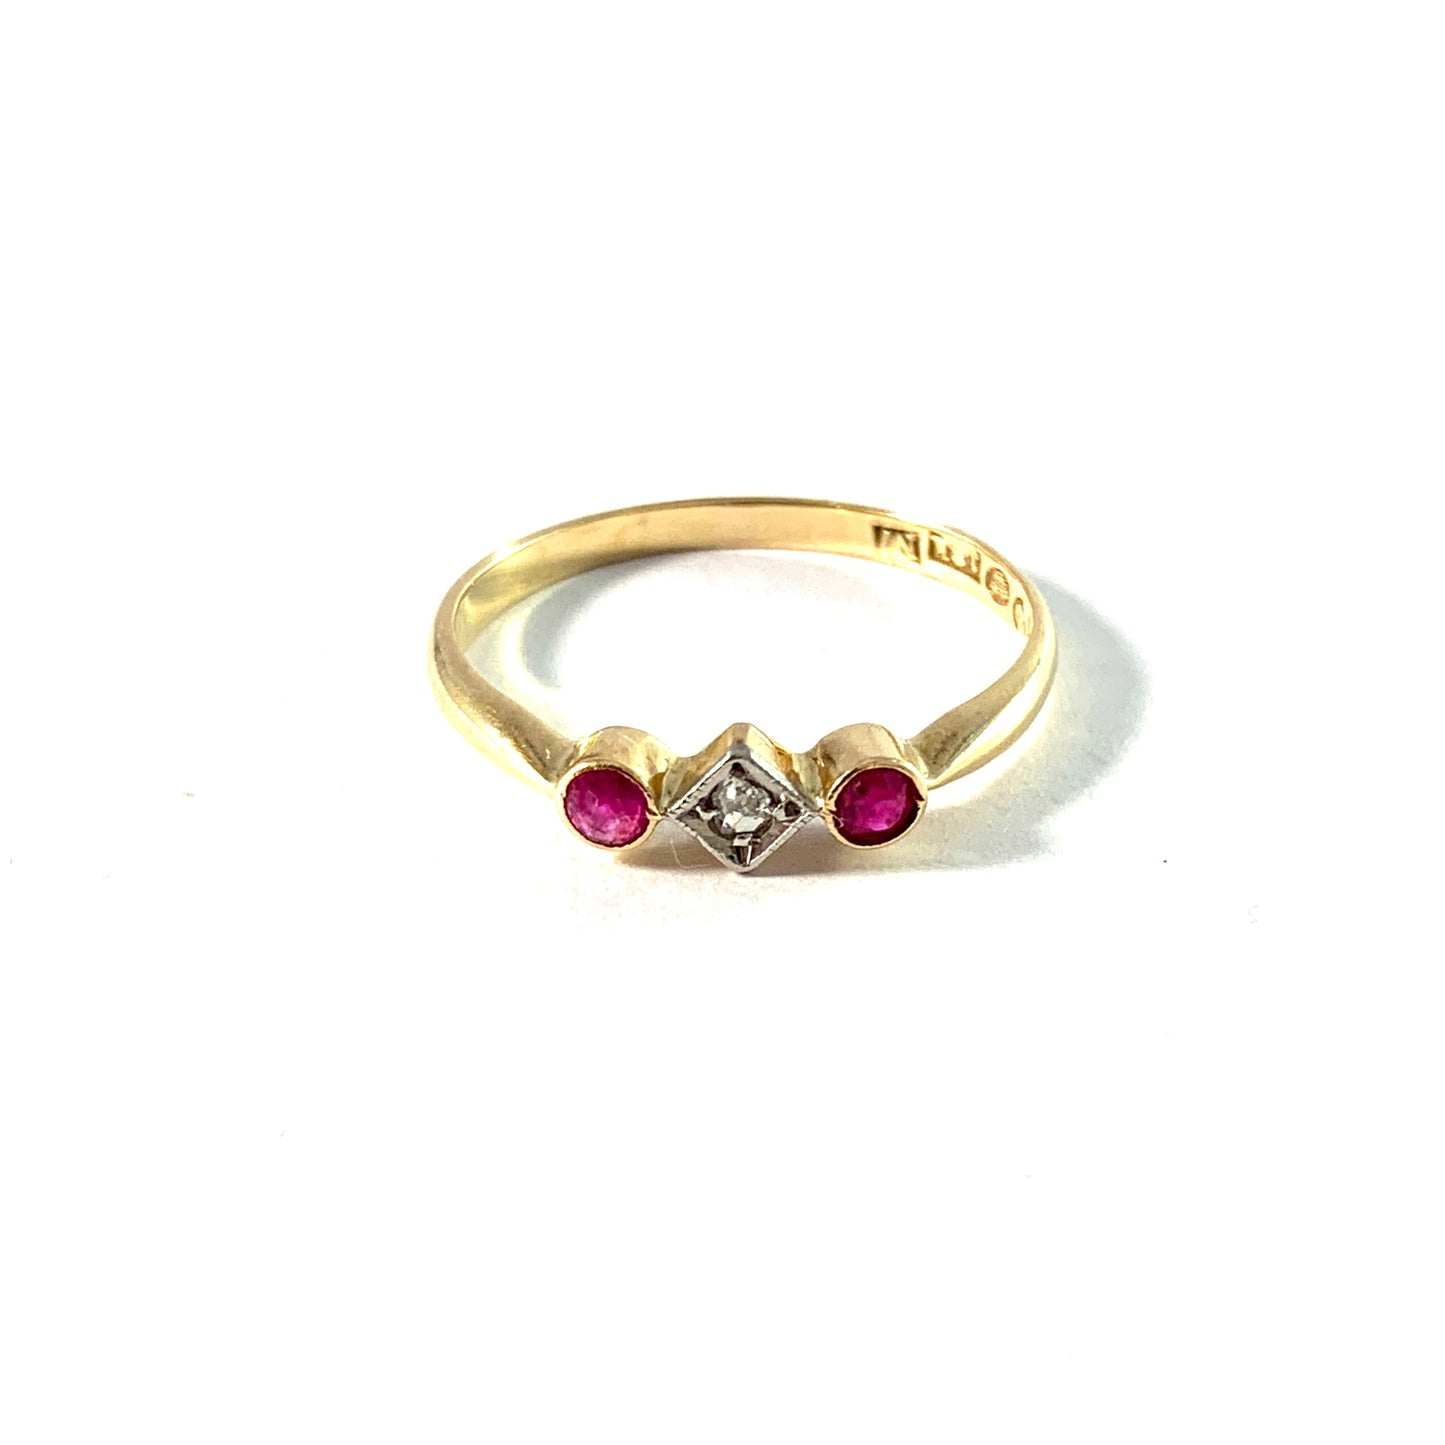 Nordiska Kompaniet, Stockholm 1915. Antique 18k Gold Diamond Sapphire Ring.